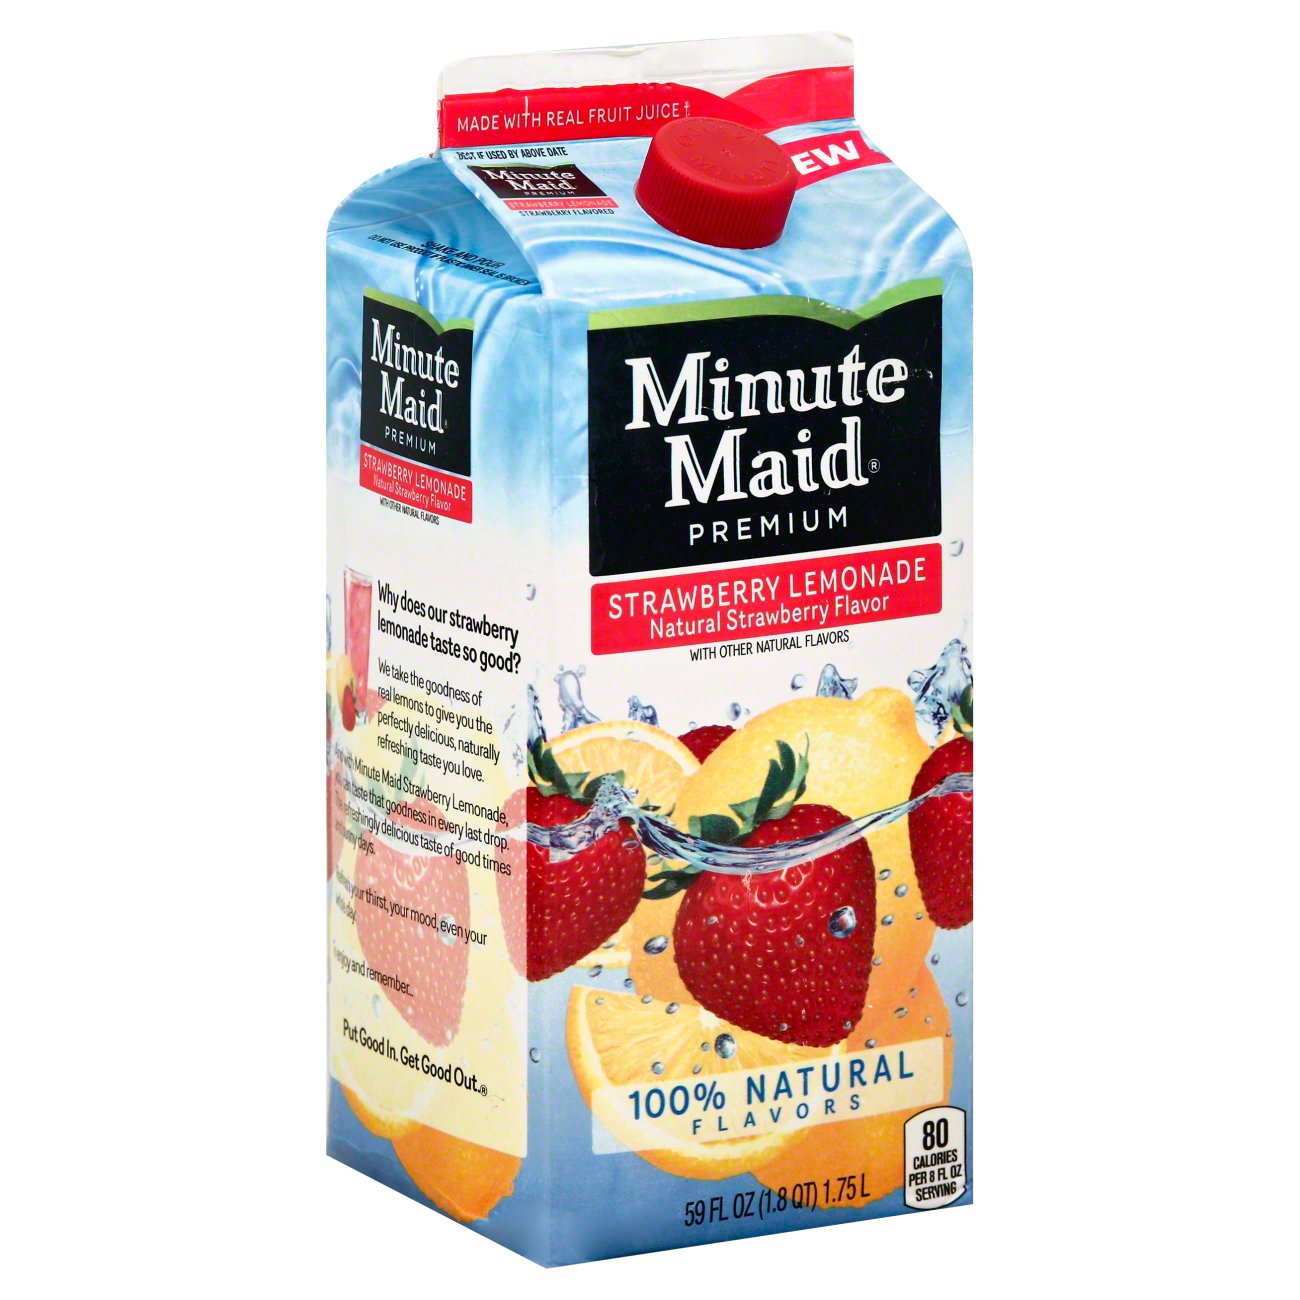 Minute Maid Premium Strawberry Lemonade Shop Juice At H E B